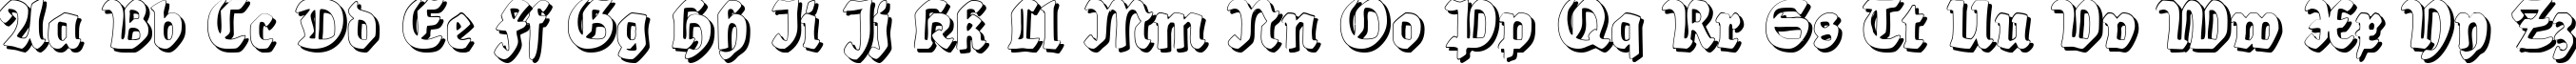 Пример написания английского алфавита шрифтом Ballade Shadow